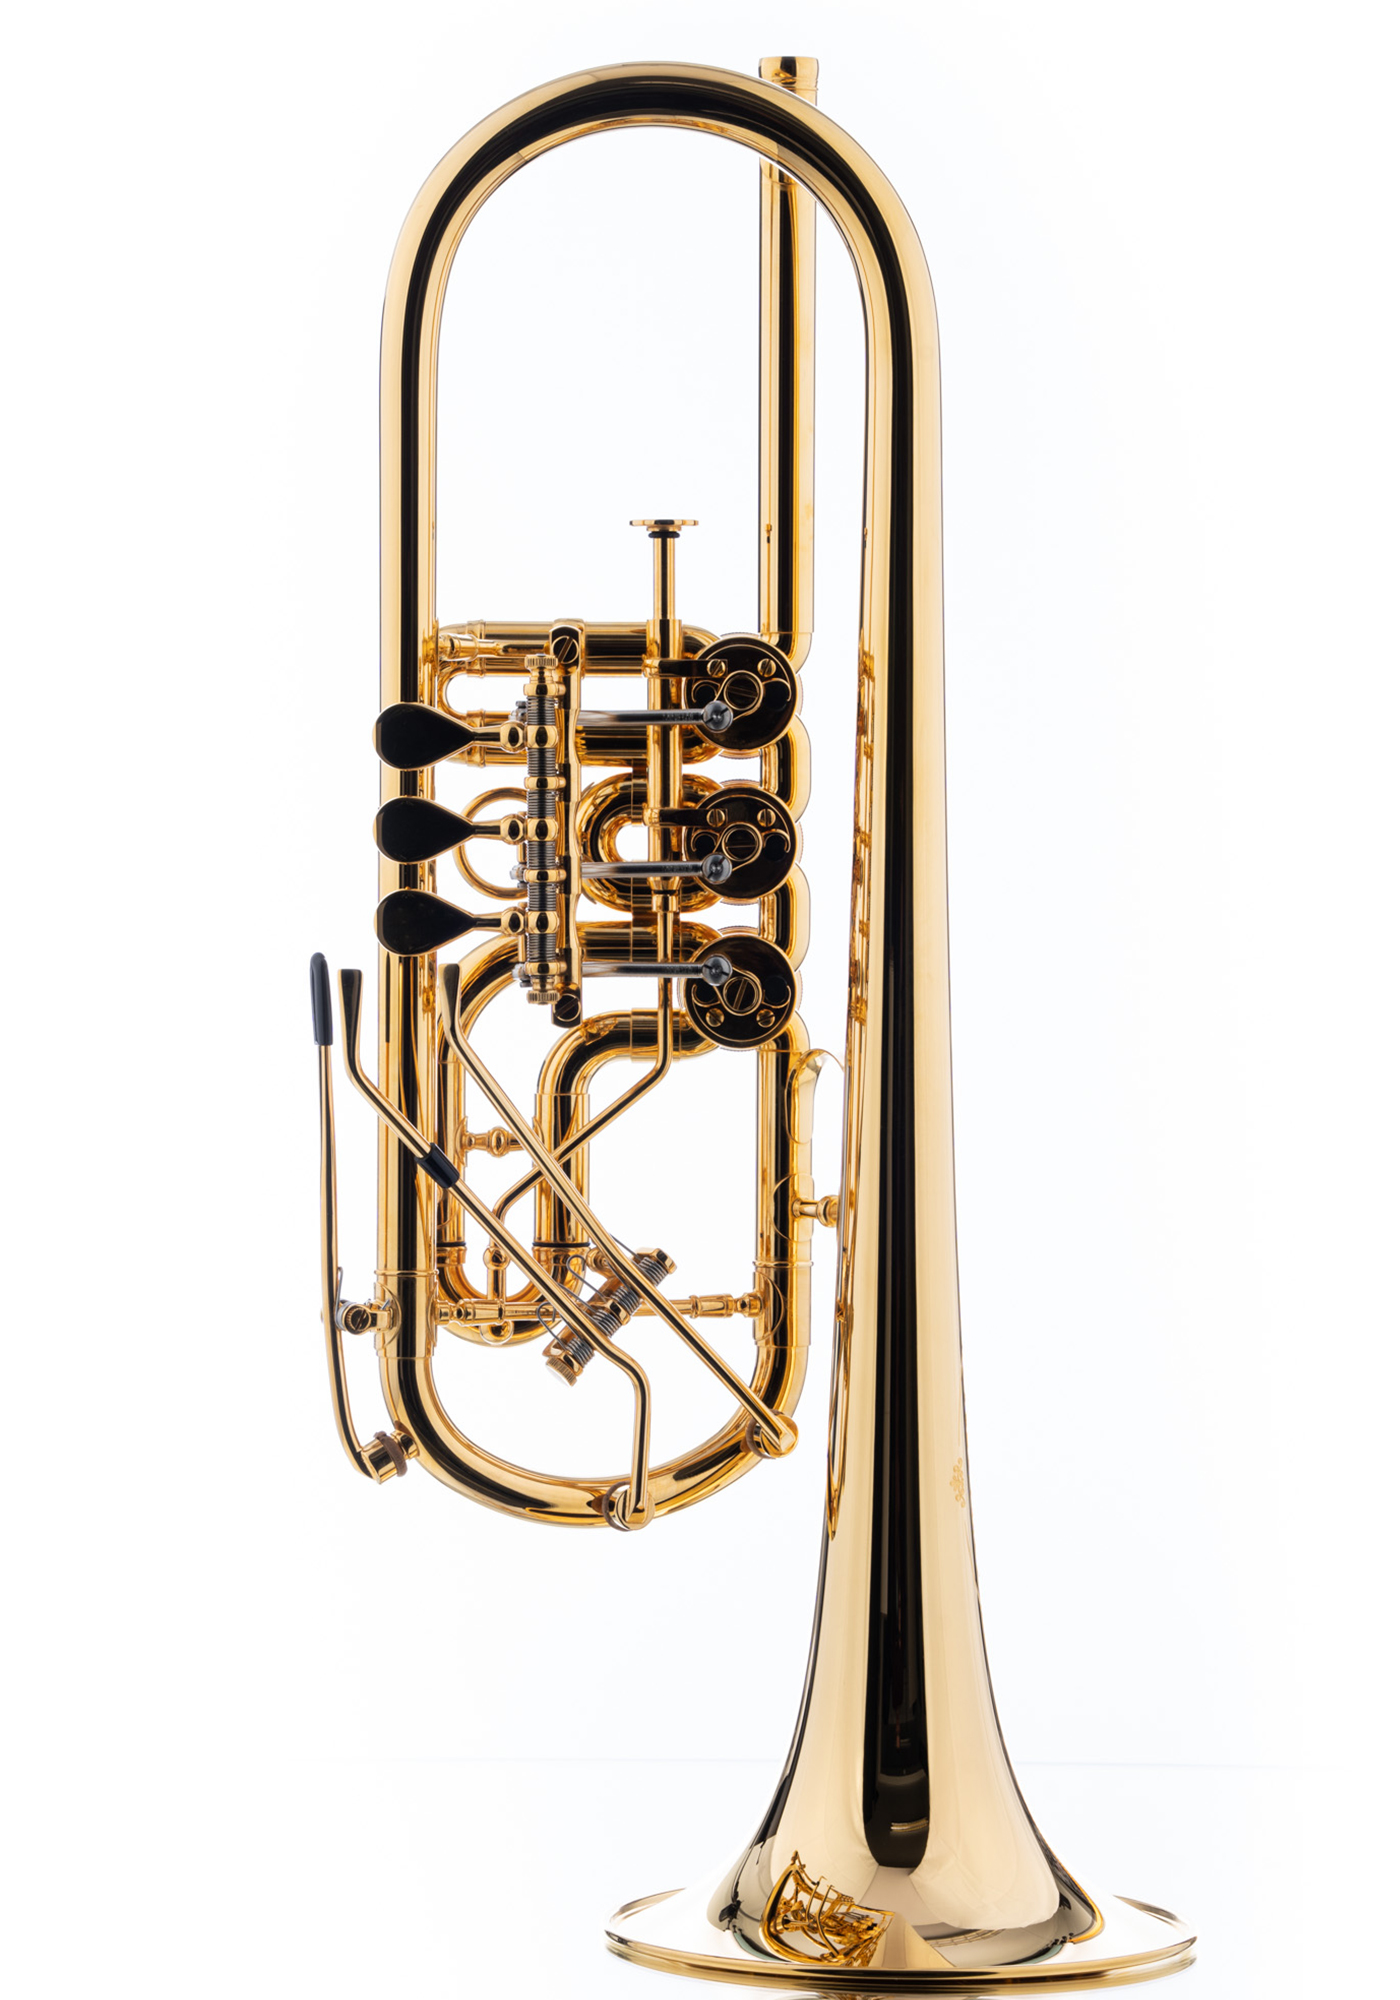 Schagerl C-Trompete "BERLIN K" heavy vergoldet